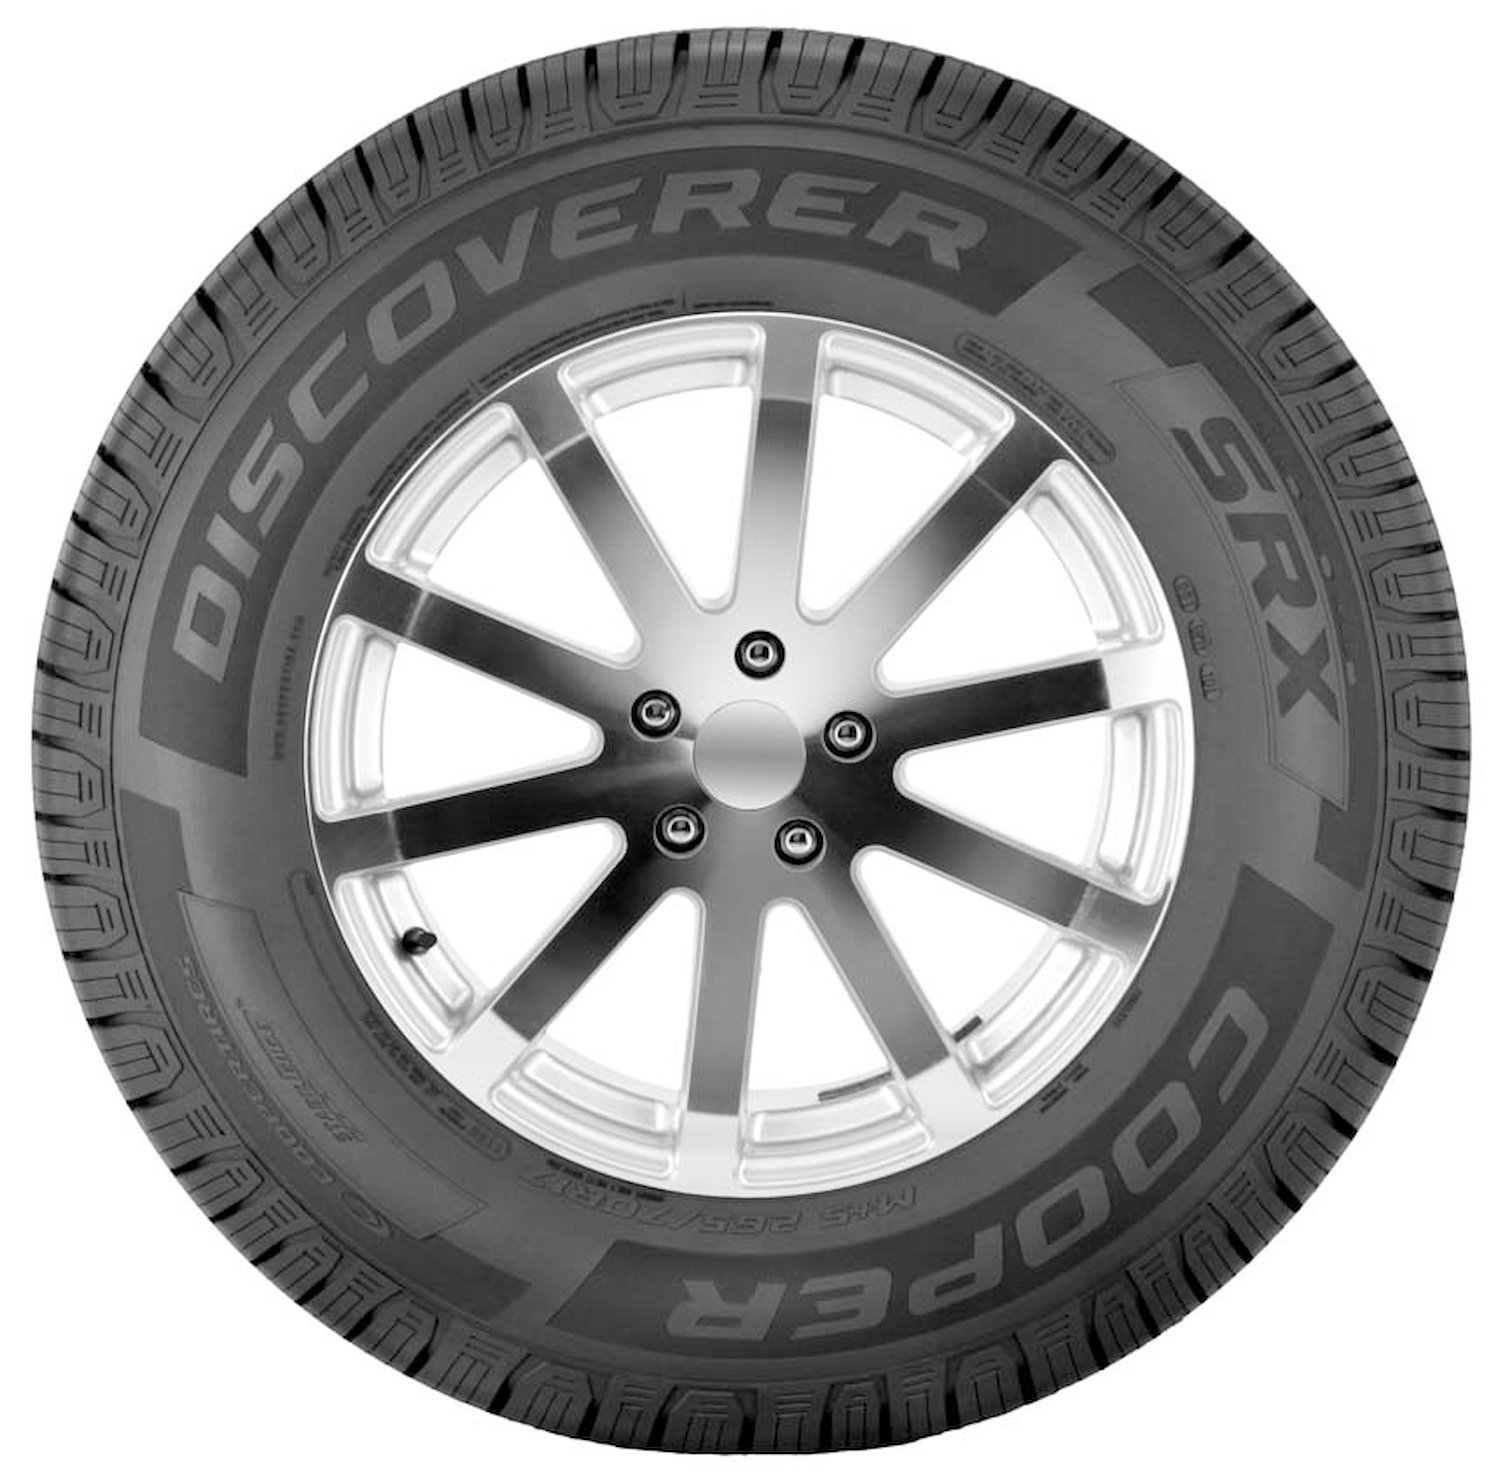 Discoverer SRX Commuter/Touring Tire, 275/65R18